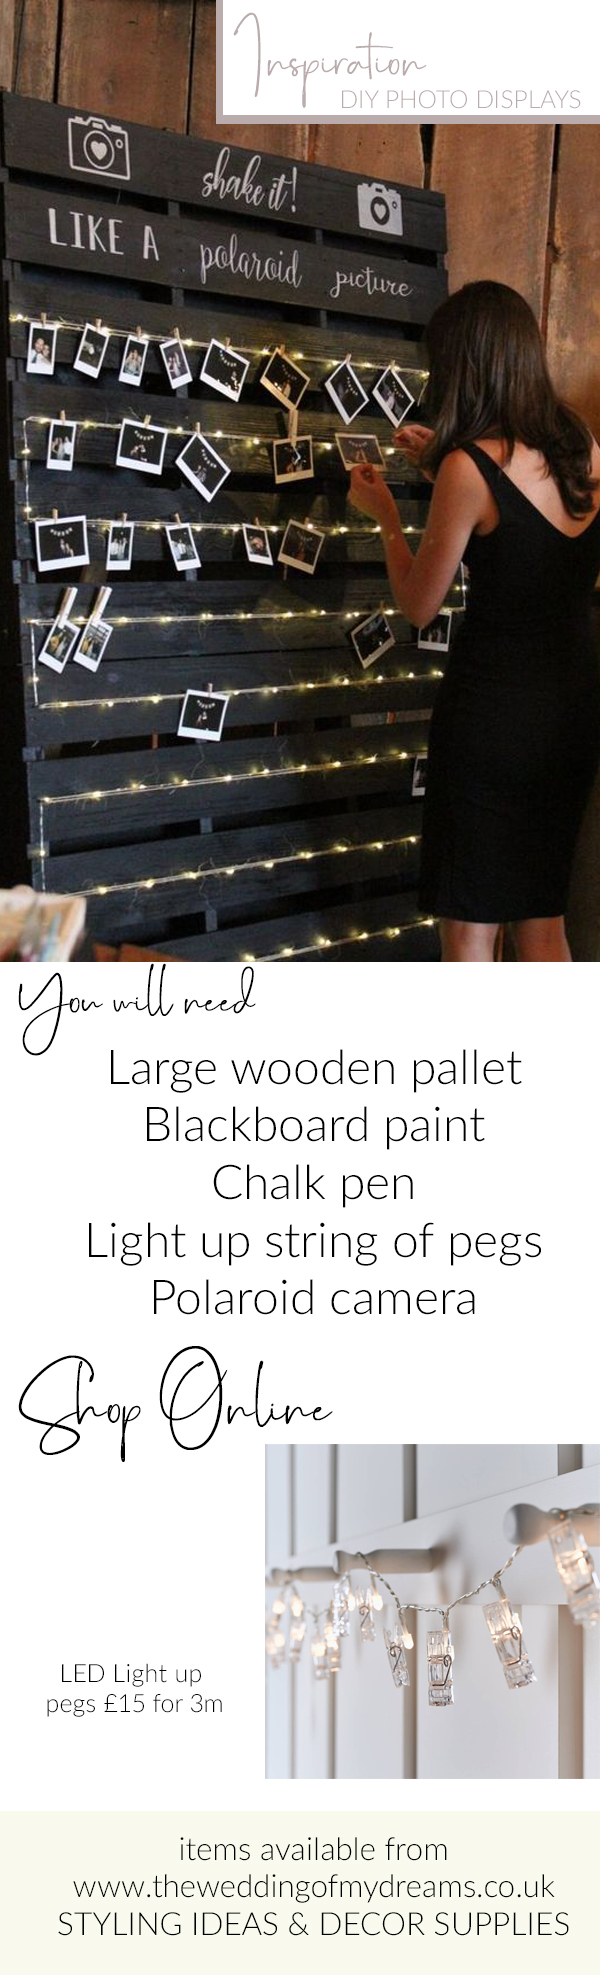 DIY polaroid photo displays wooden pallets DIY wedding styling ideas 